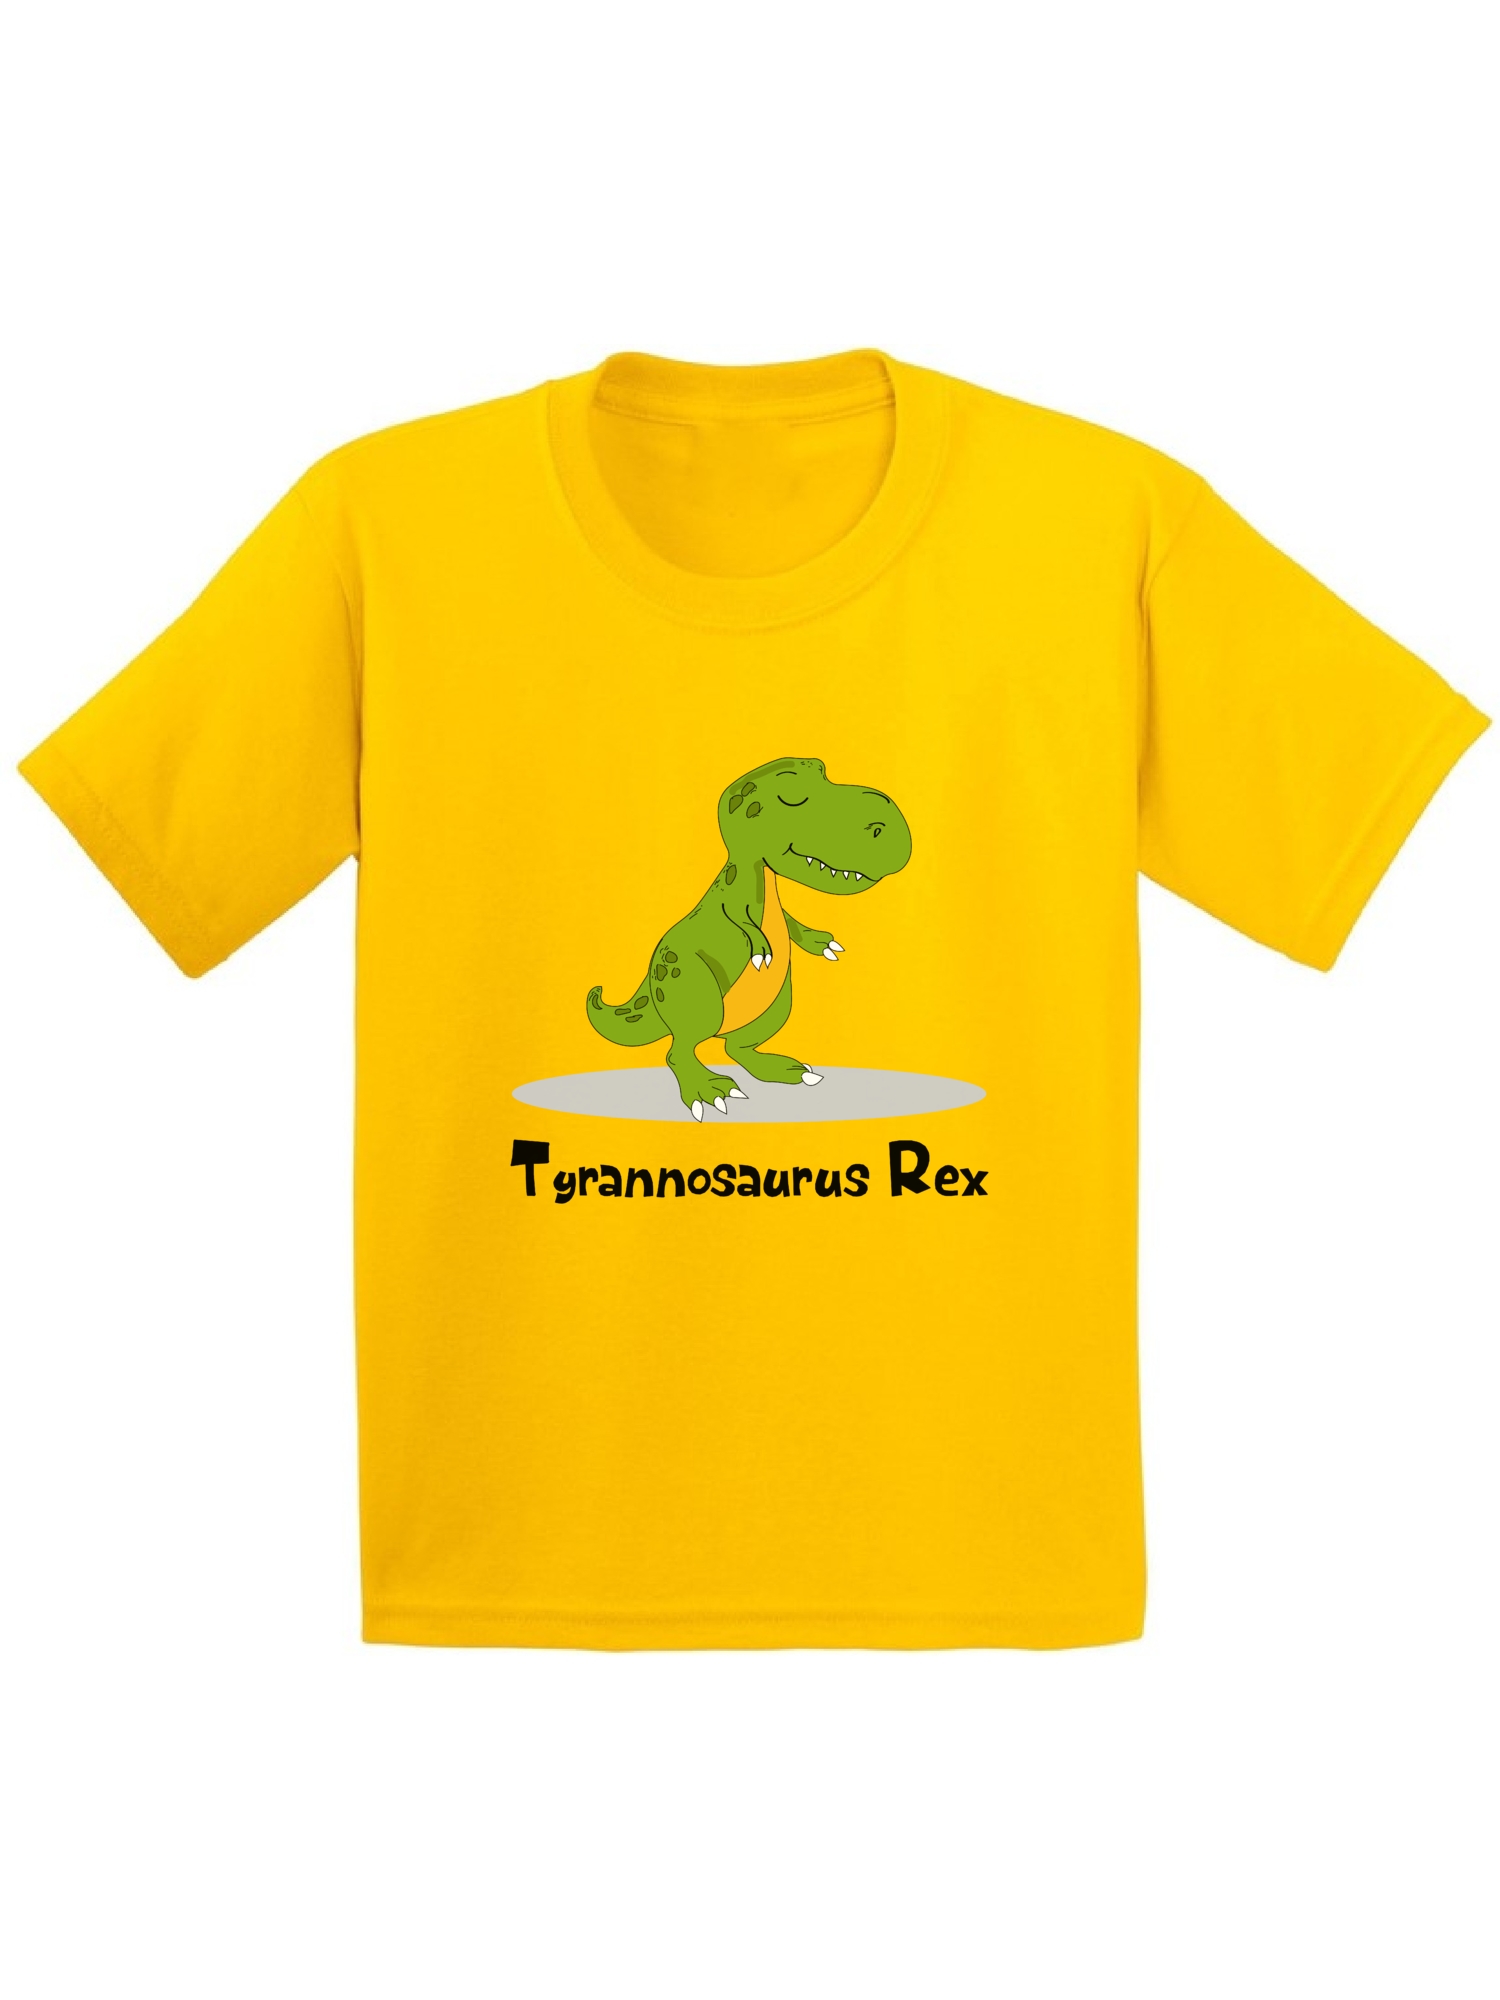 Awkward Styles Tyrannosaurus Rex Dinosaur Youth Shirt Kids Dinosaur Shirt Tyrannosaurus Rex Tshirt Dinosaur Birthday Party Dinosaur Gifts for Boys Cute Dinosaur Outfit for Girls Dinosaur Clothes - image 1 of 4